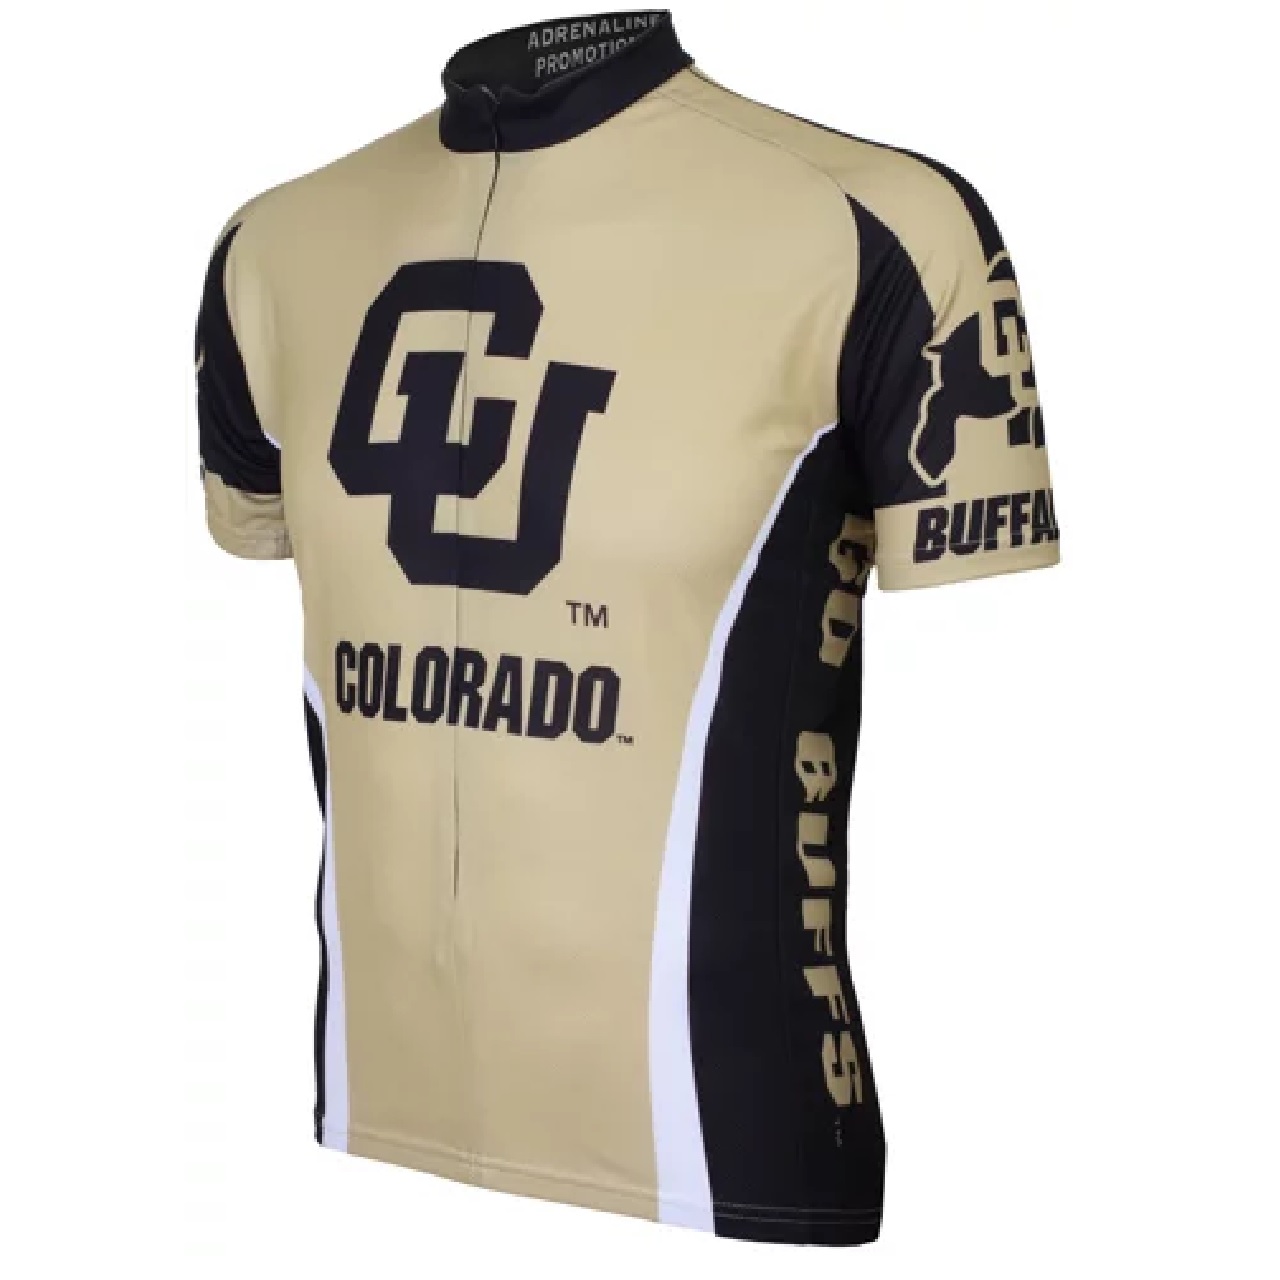 Adrenaline Promo Colorado University Buffaloes College 3/4 zip Men's Cycling Jersey